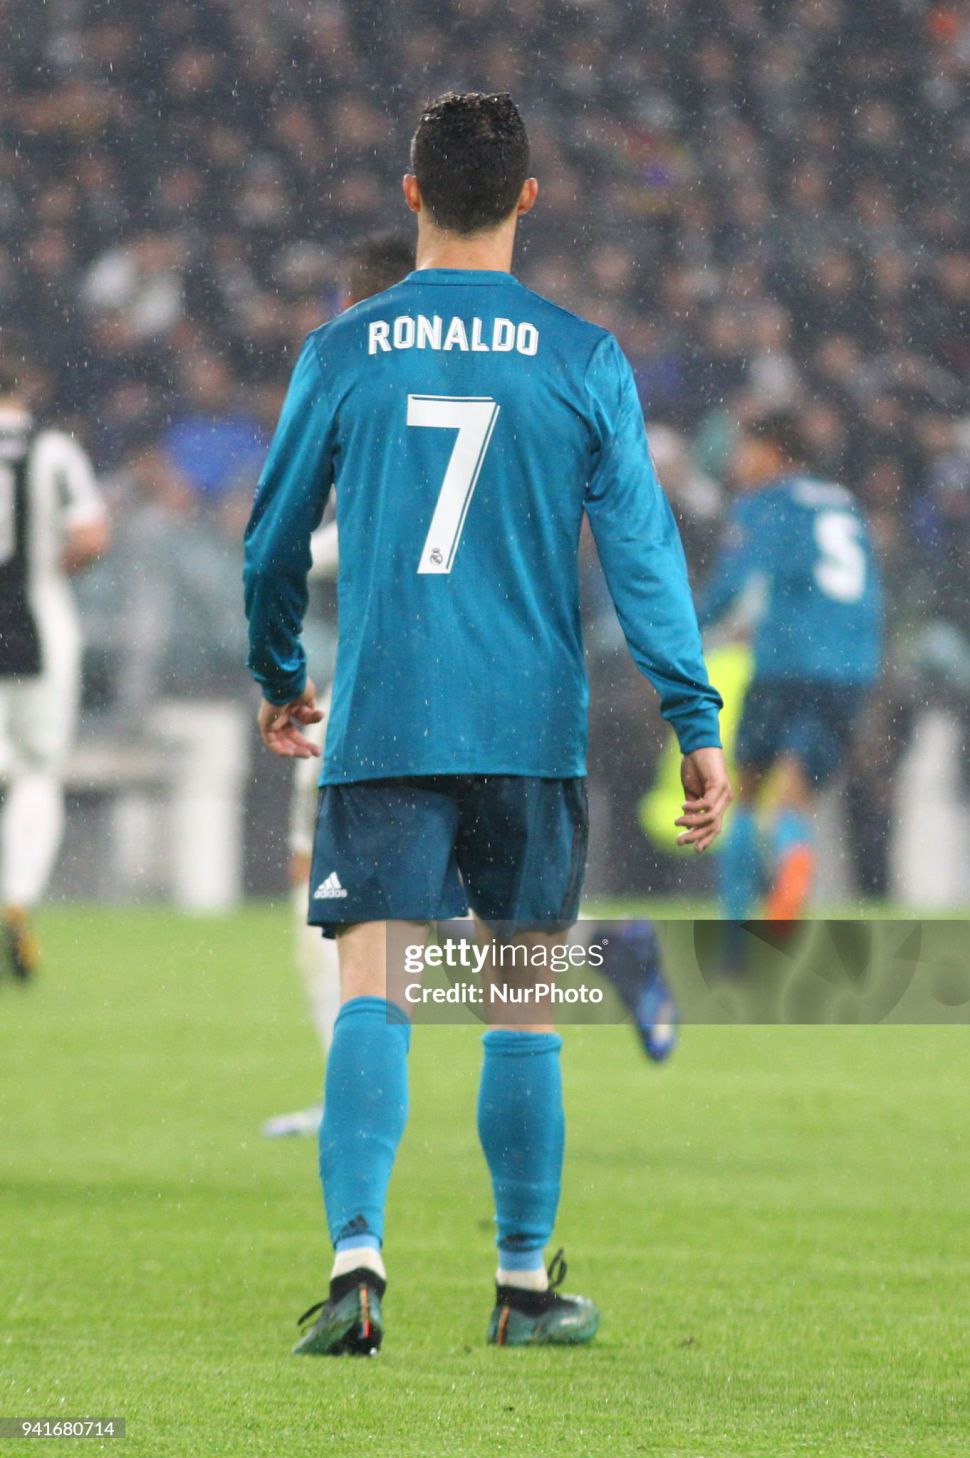 Áo Ronaldo 7 Real Madrid 2017 2018 third shirt jersey BR3539 Adidas